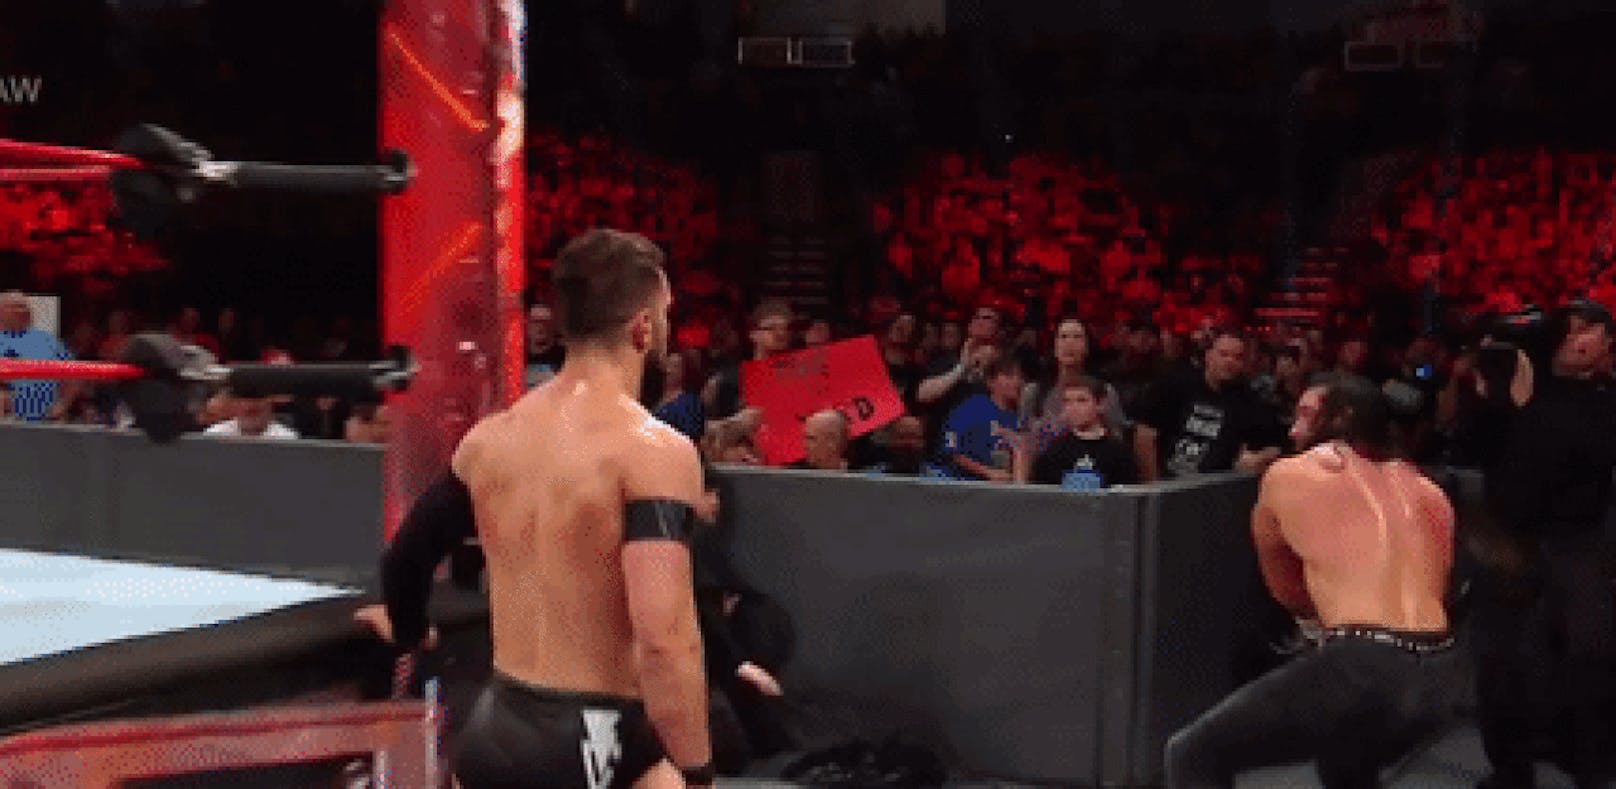 Böse Kopfverletzung nach missglücktem WWE-Stunt